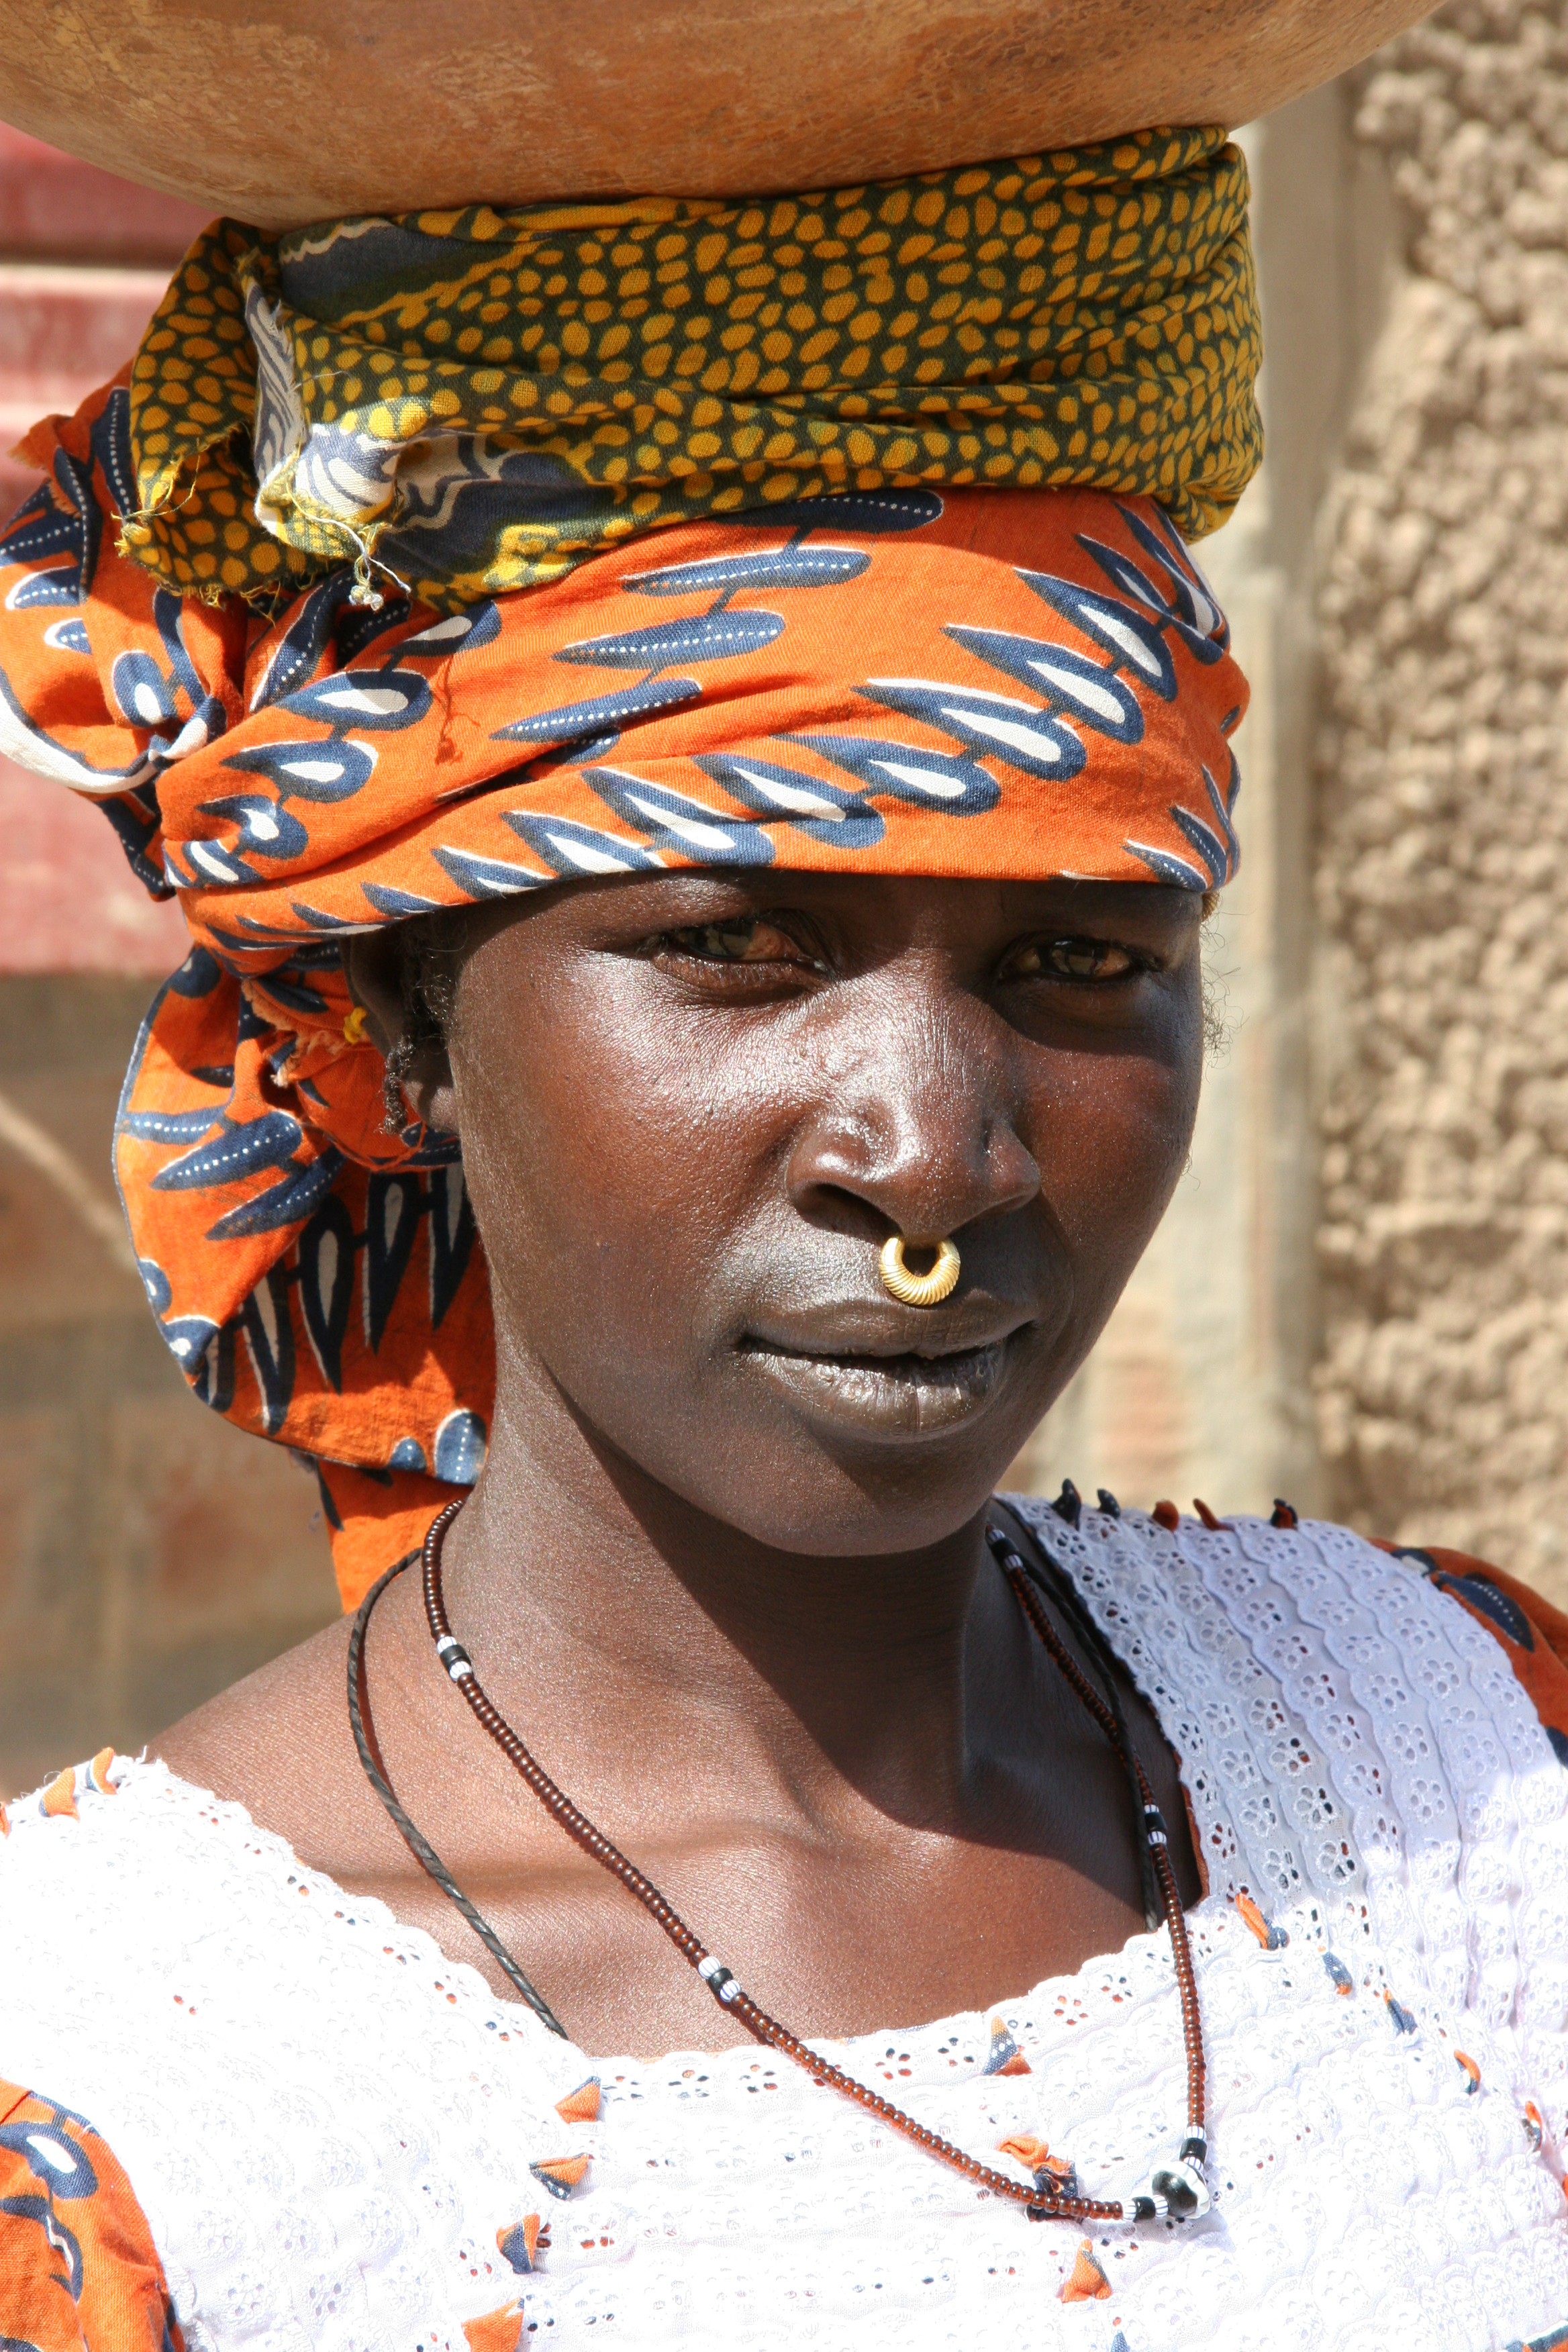 http://upload.wikimedia.org/wikipedia/commons/6/6f/Mali_Peul_woman.jpg